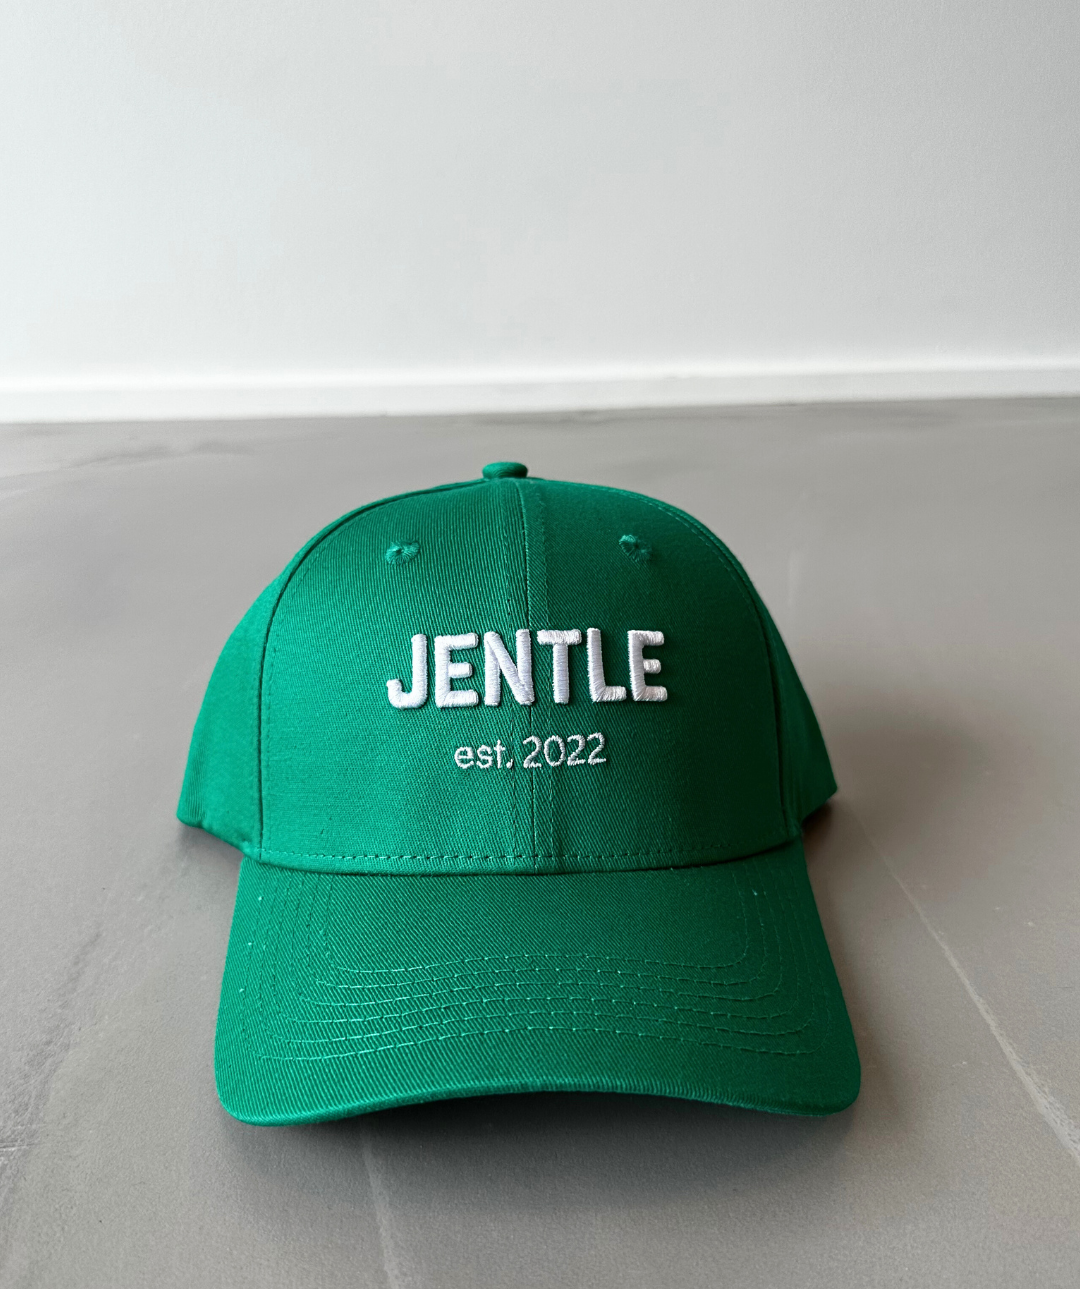 Jentle - Original Cap (Green)